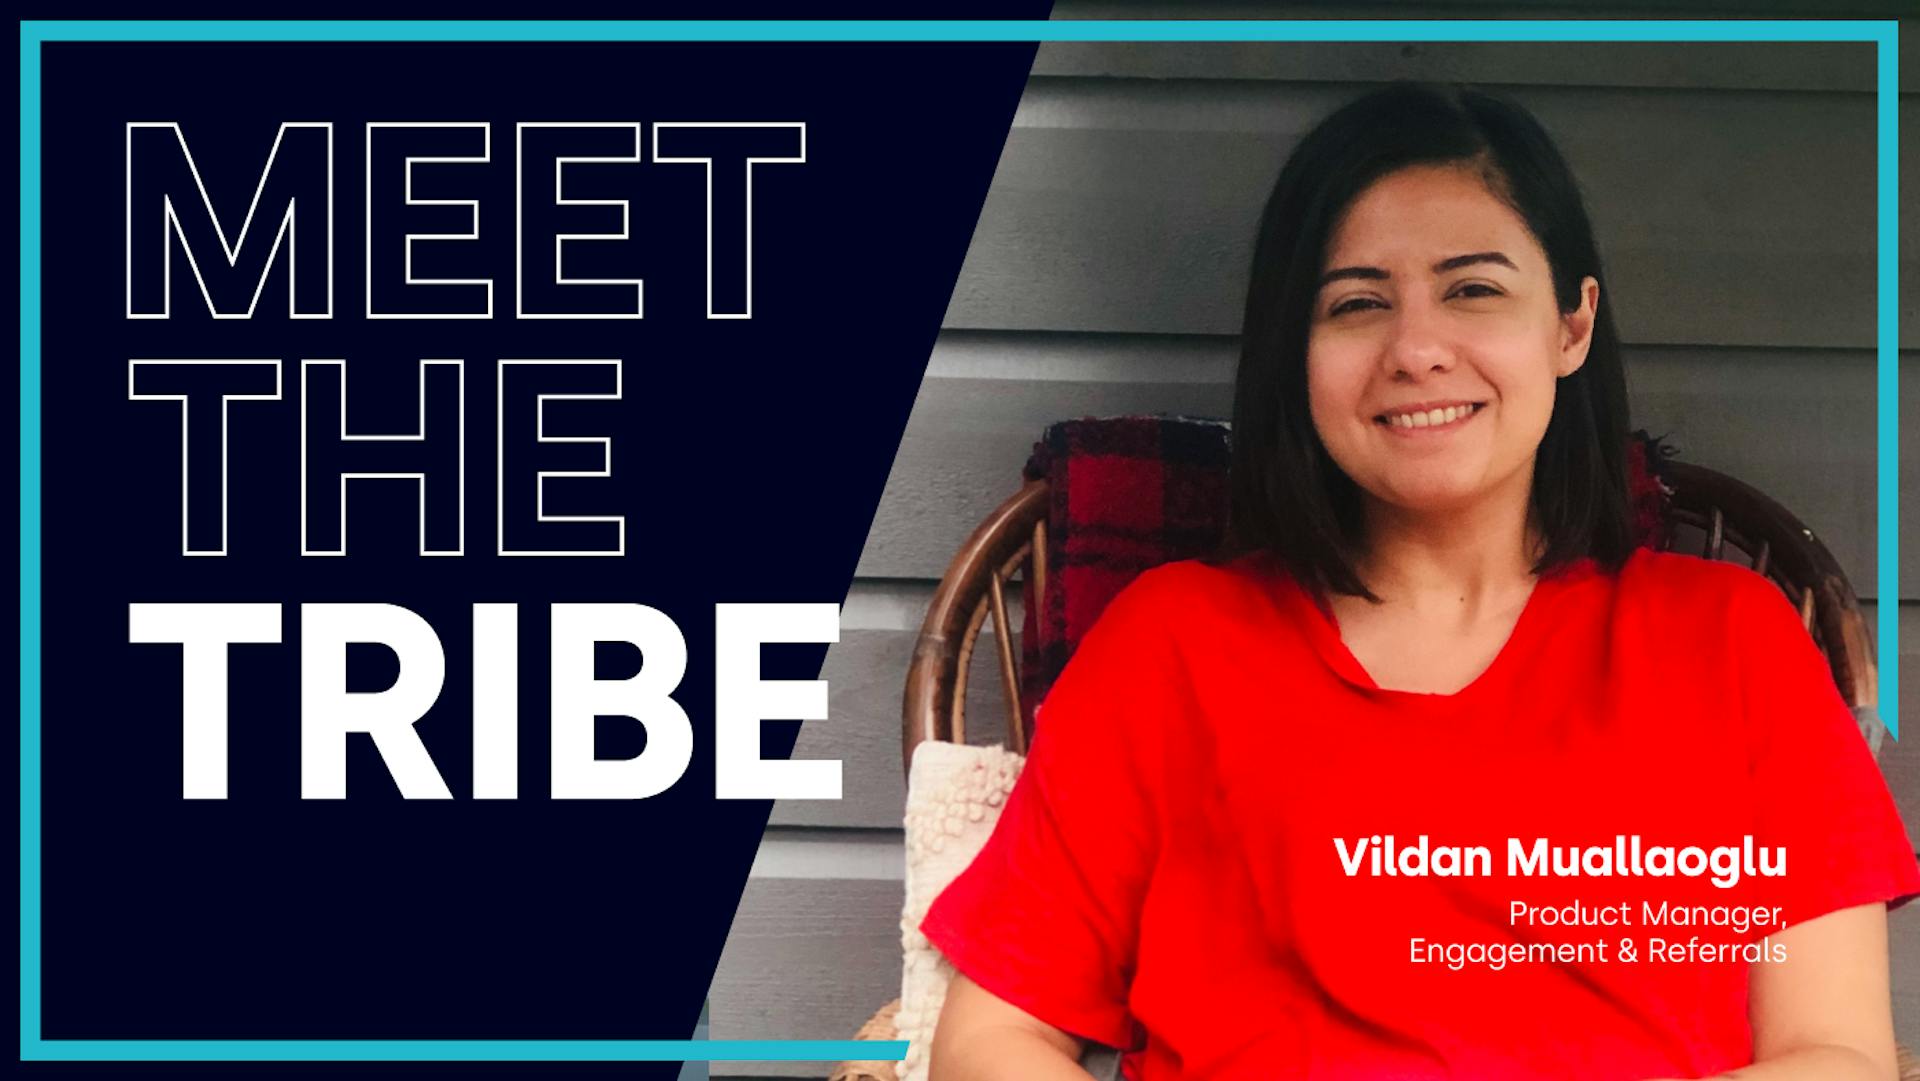 Meet the Tribe - Vildan